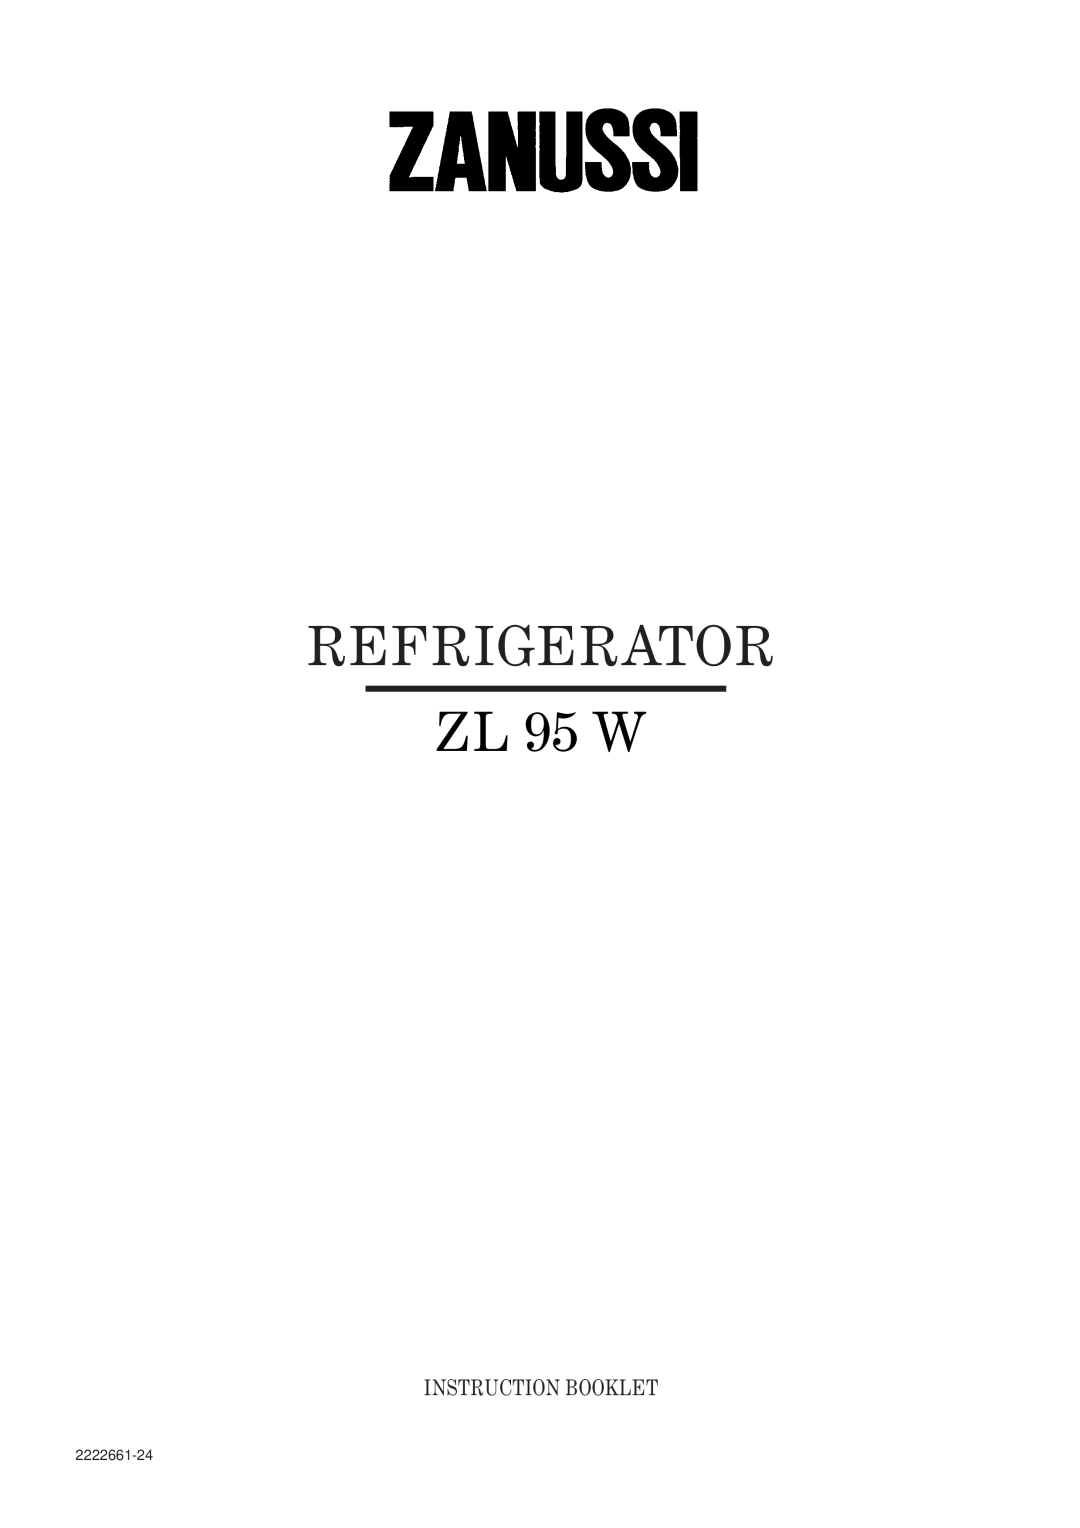 Zanussi ZL 95 W manual Refrigerator, Instruction Booklet, 2222661-24 